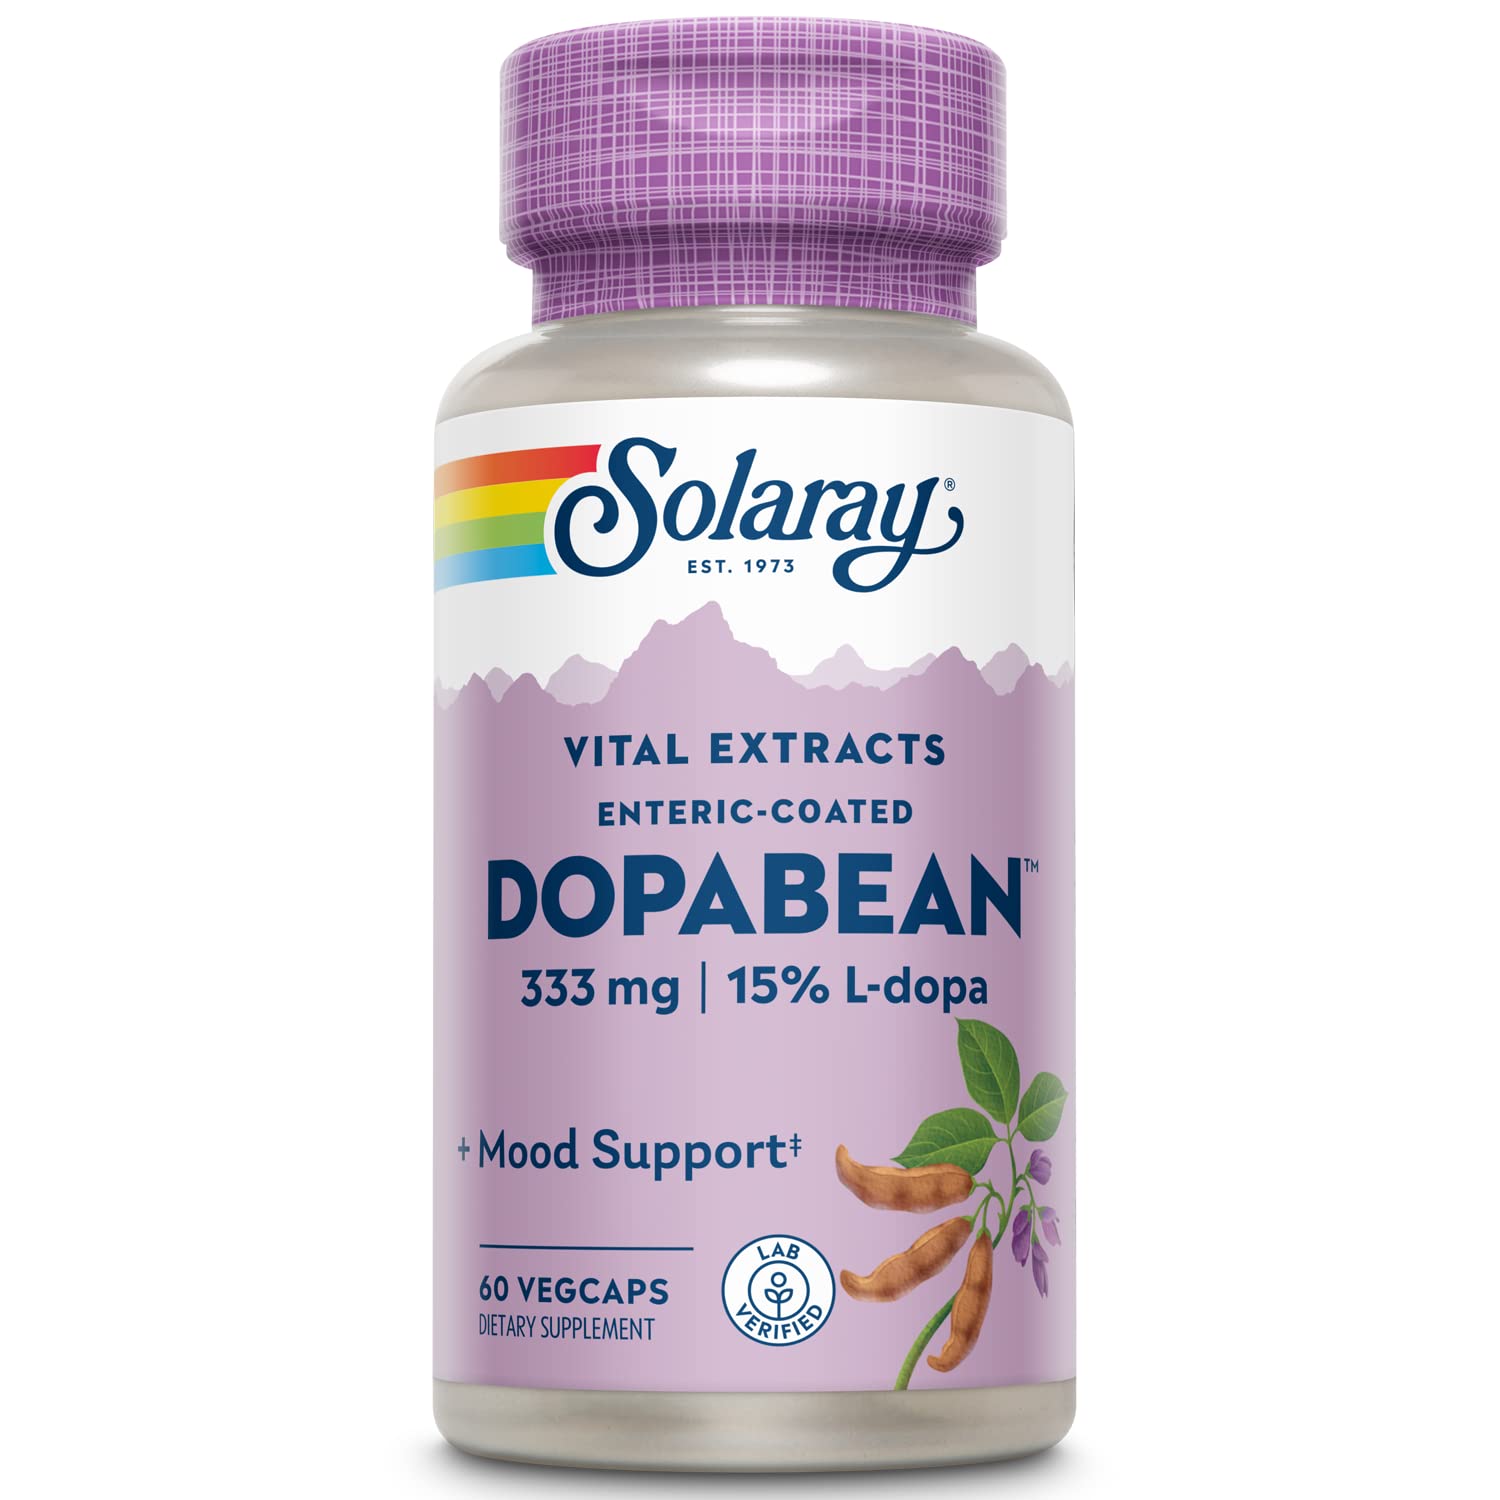 Solaray Dopa Bean - Velvet Bean Extract 60ct VegCap